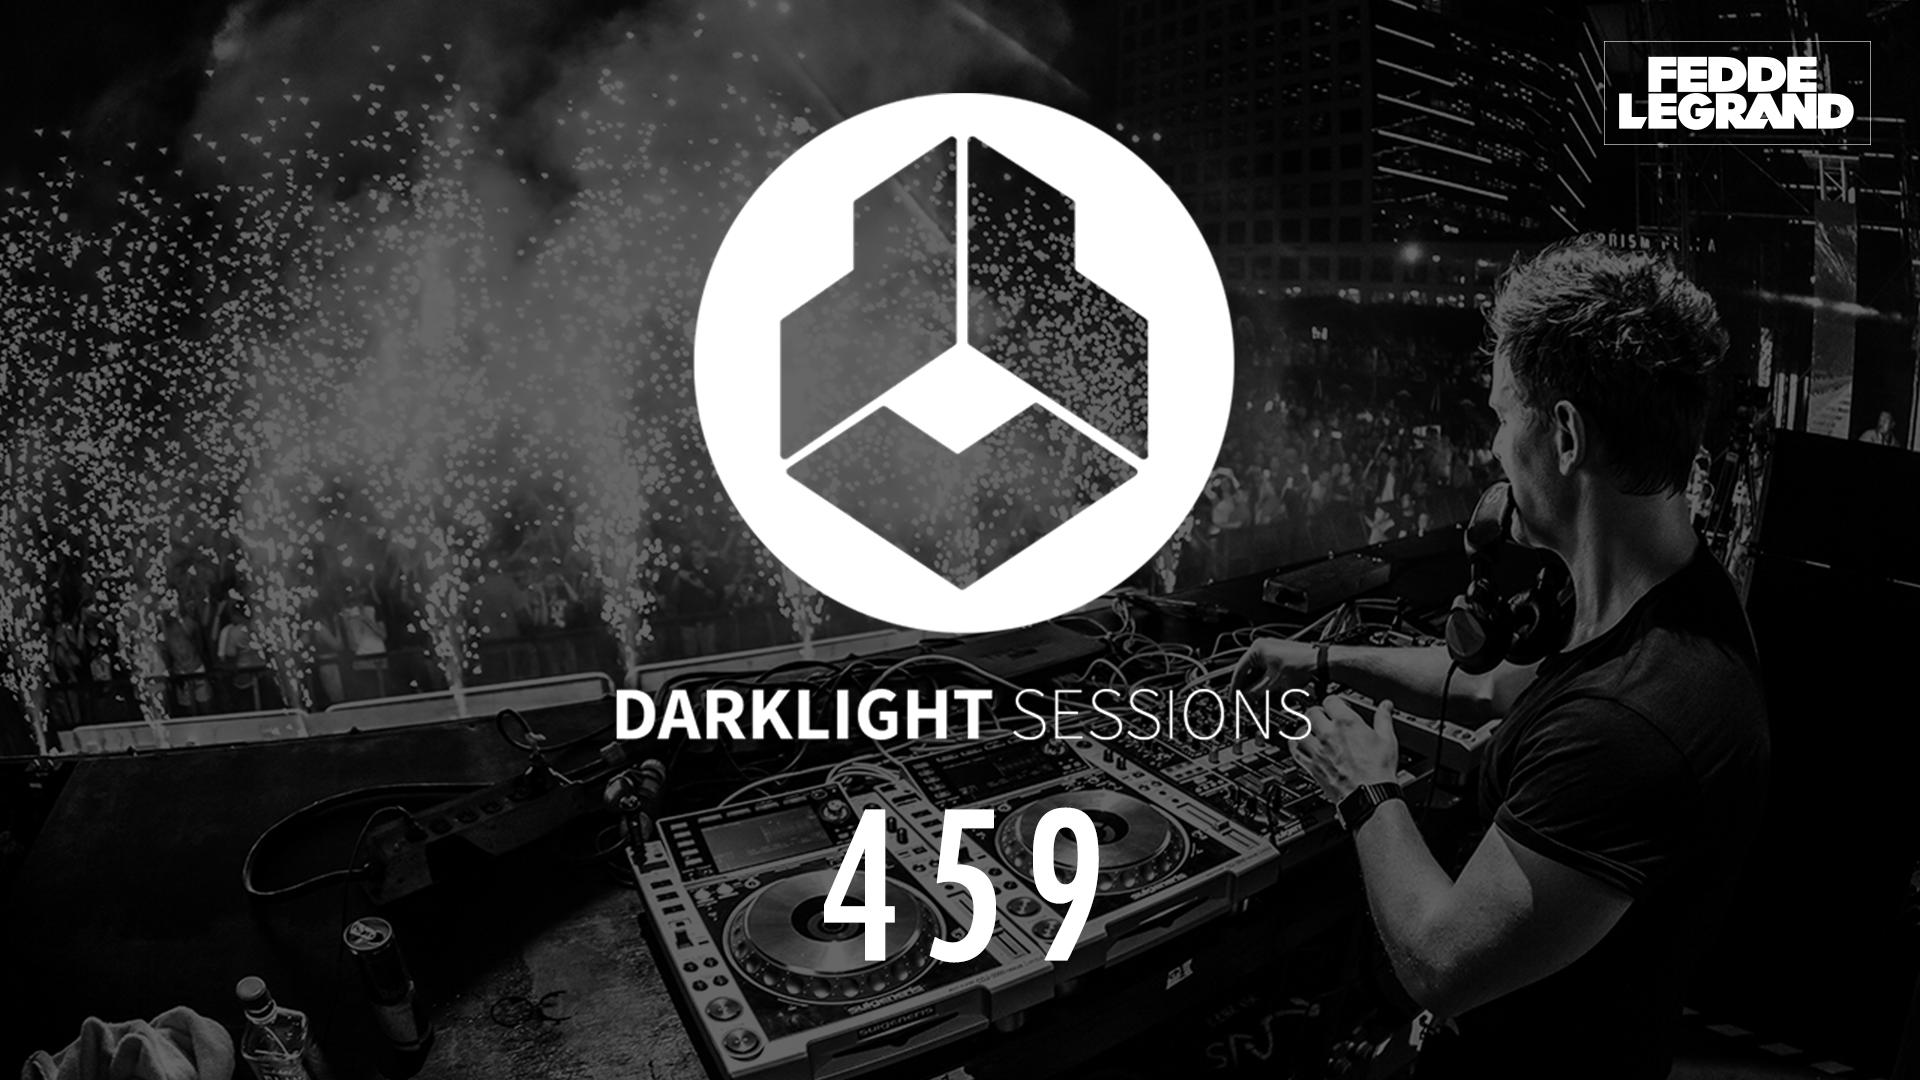 Darklight Sessions 459